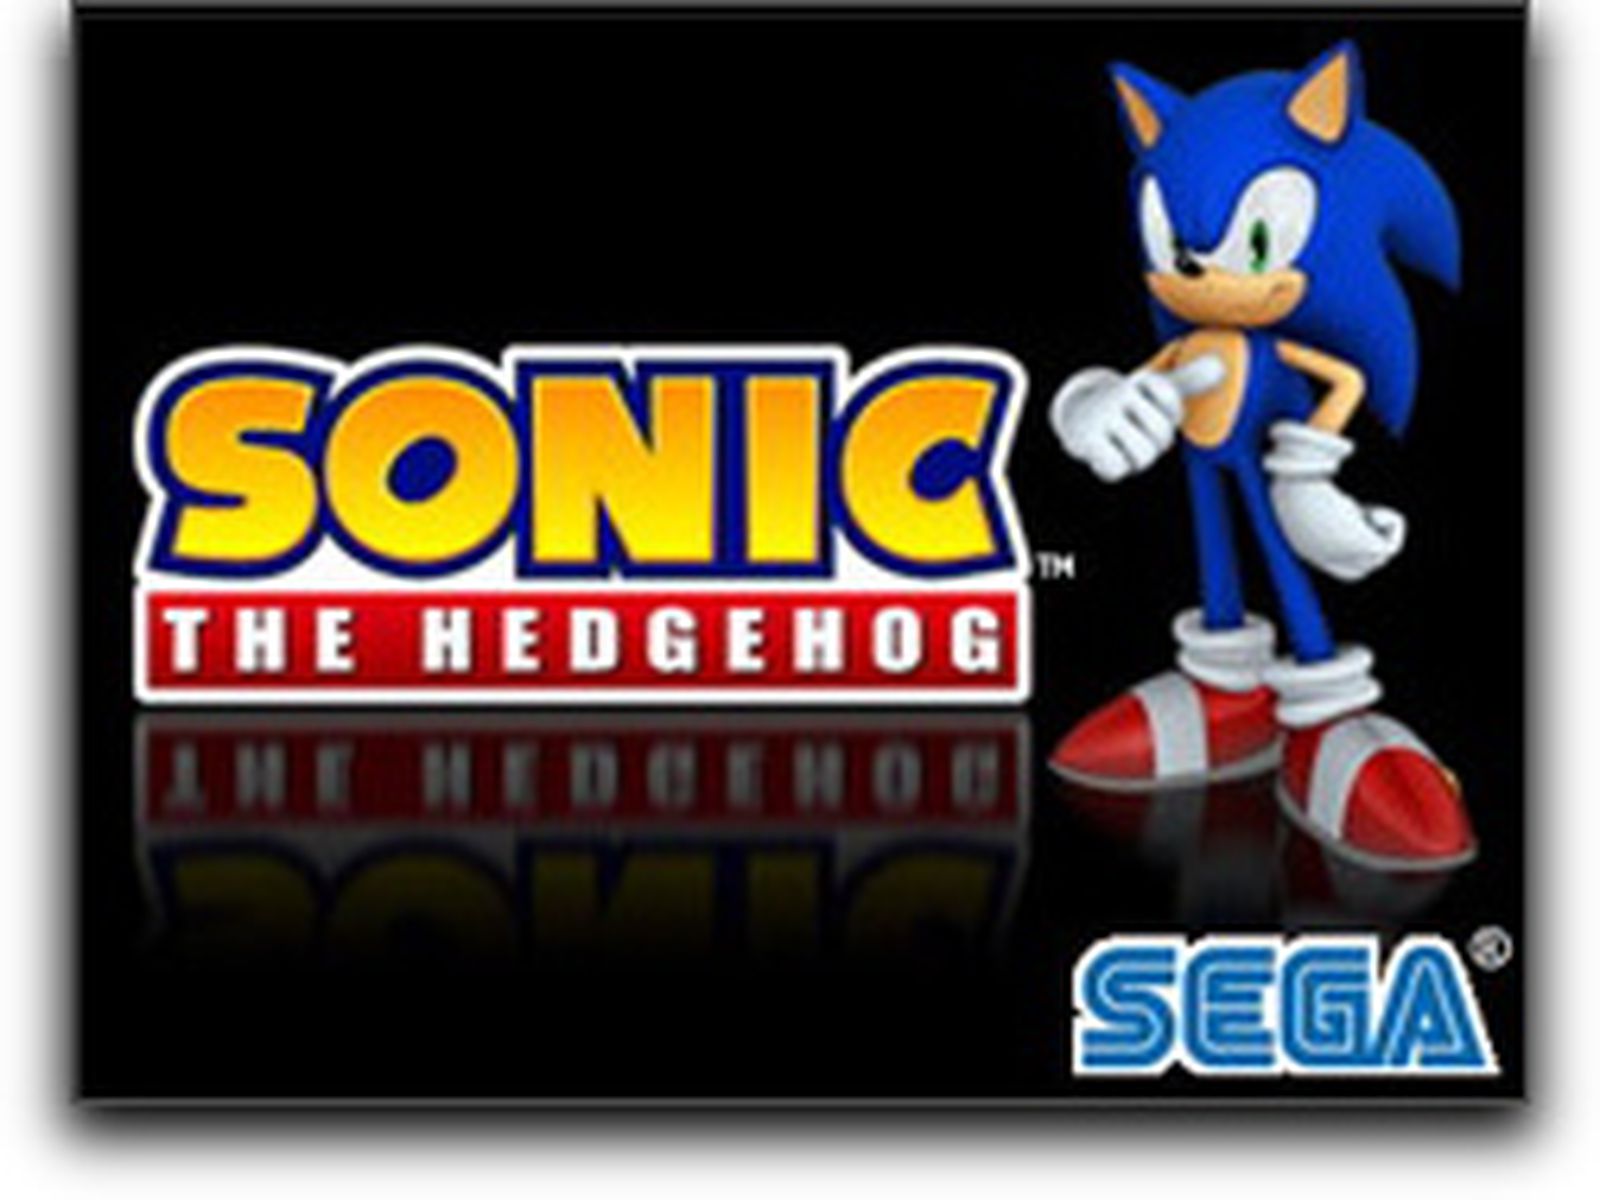 HOW TO PLAY Sonic the Hedgehog 3 (Genesis) on iPhone, iPad, iPod, iOS